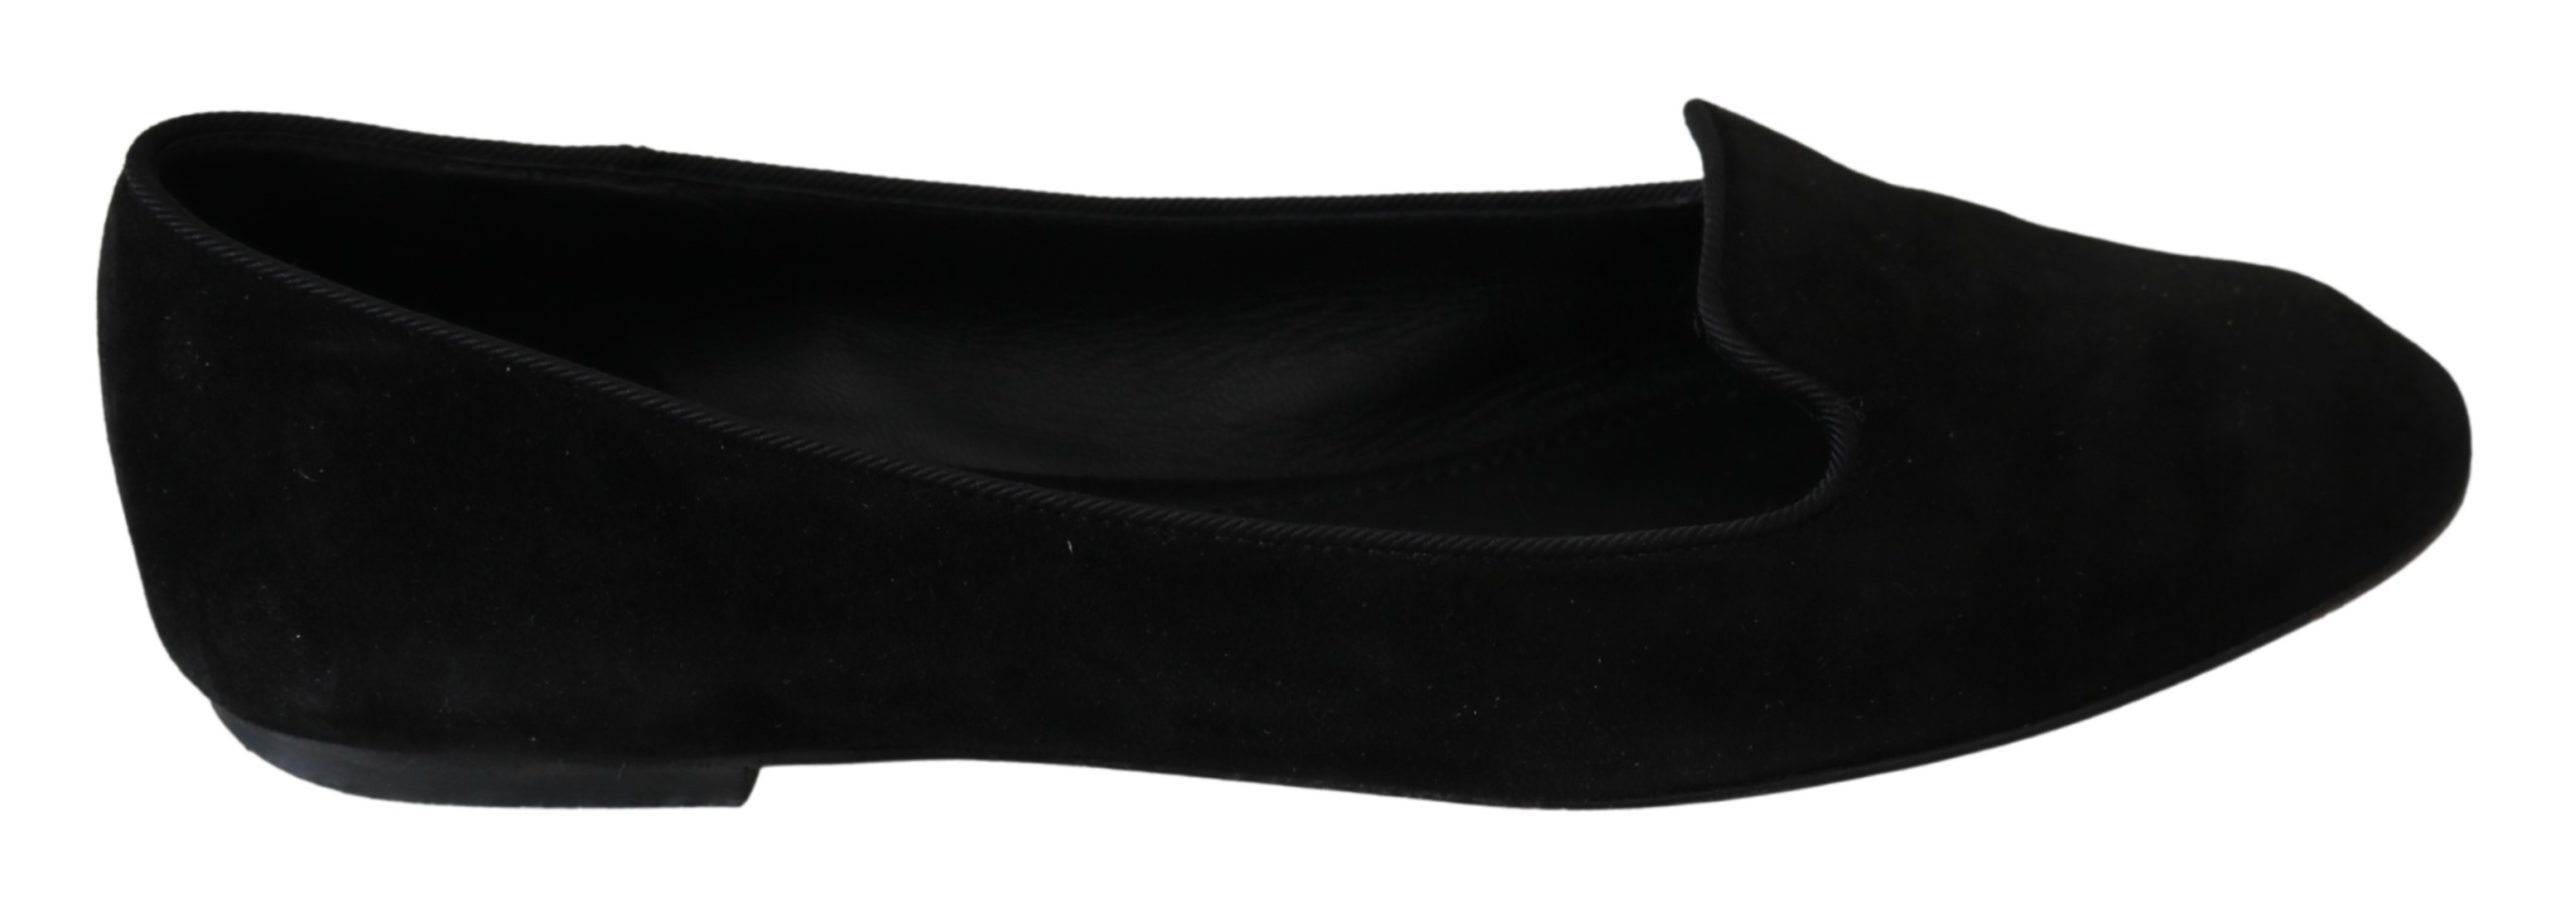 Black Leather Flat Slip On Ballet Shoes - EU38/US7.5